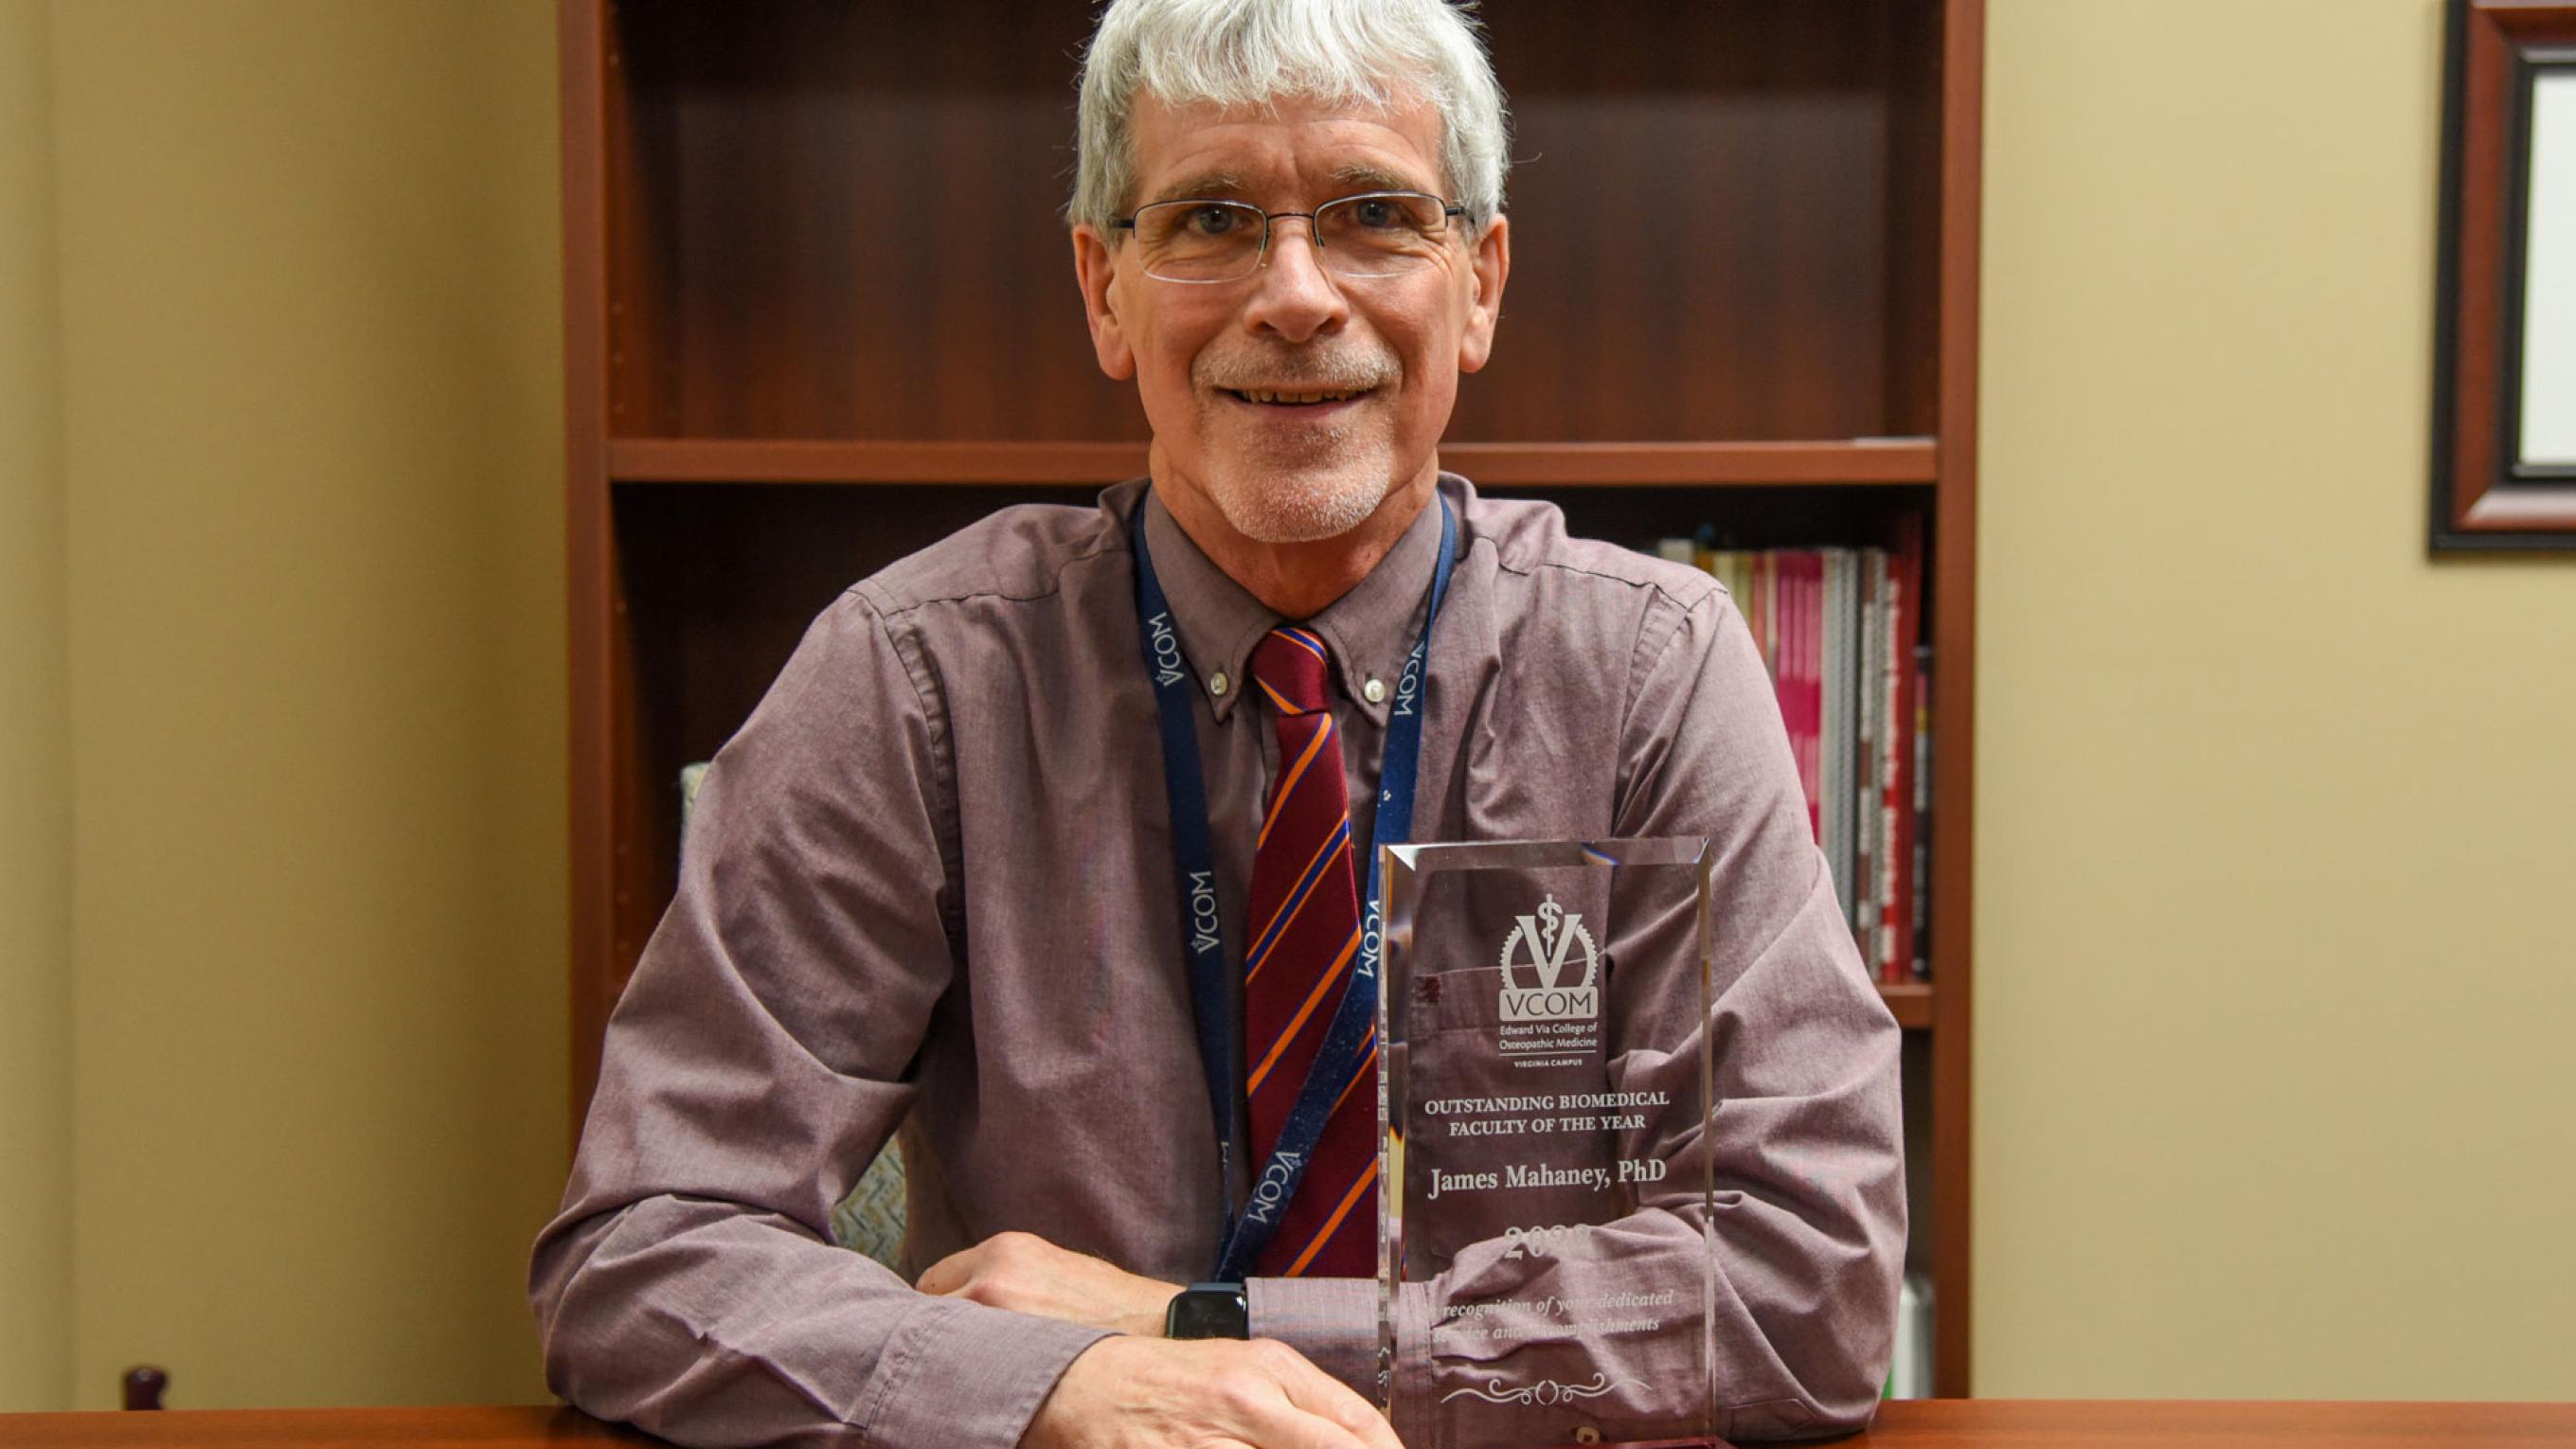 Jim Mahaney posing with award